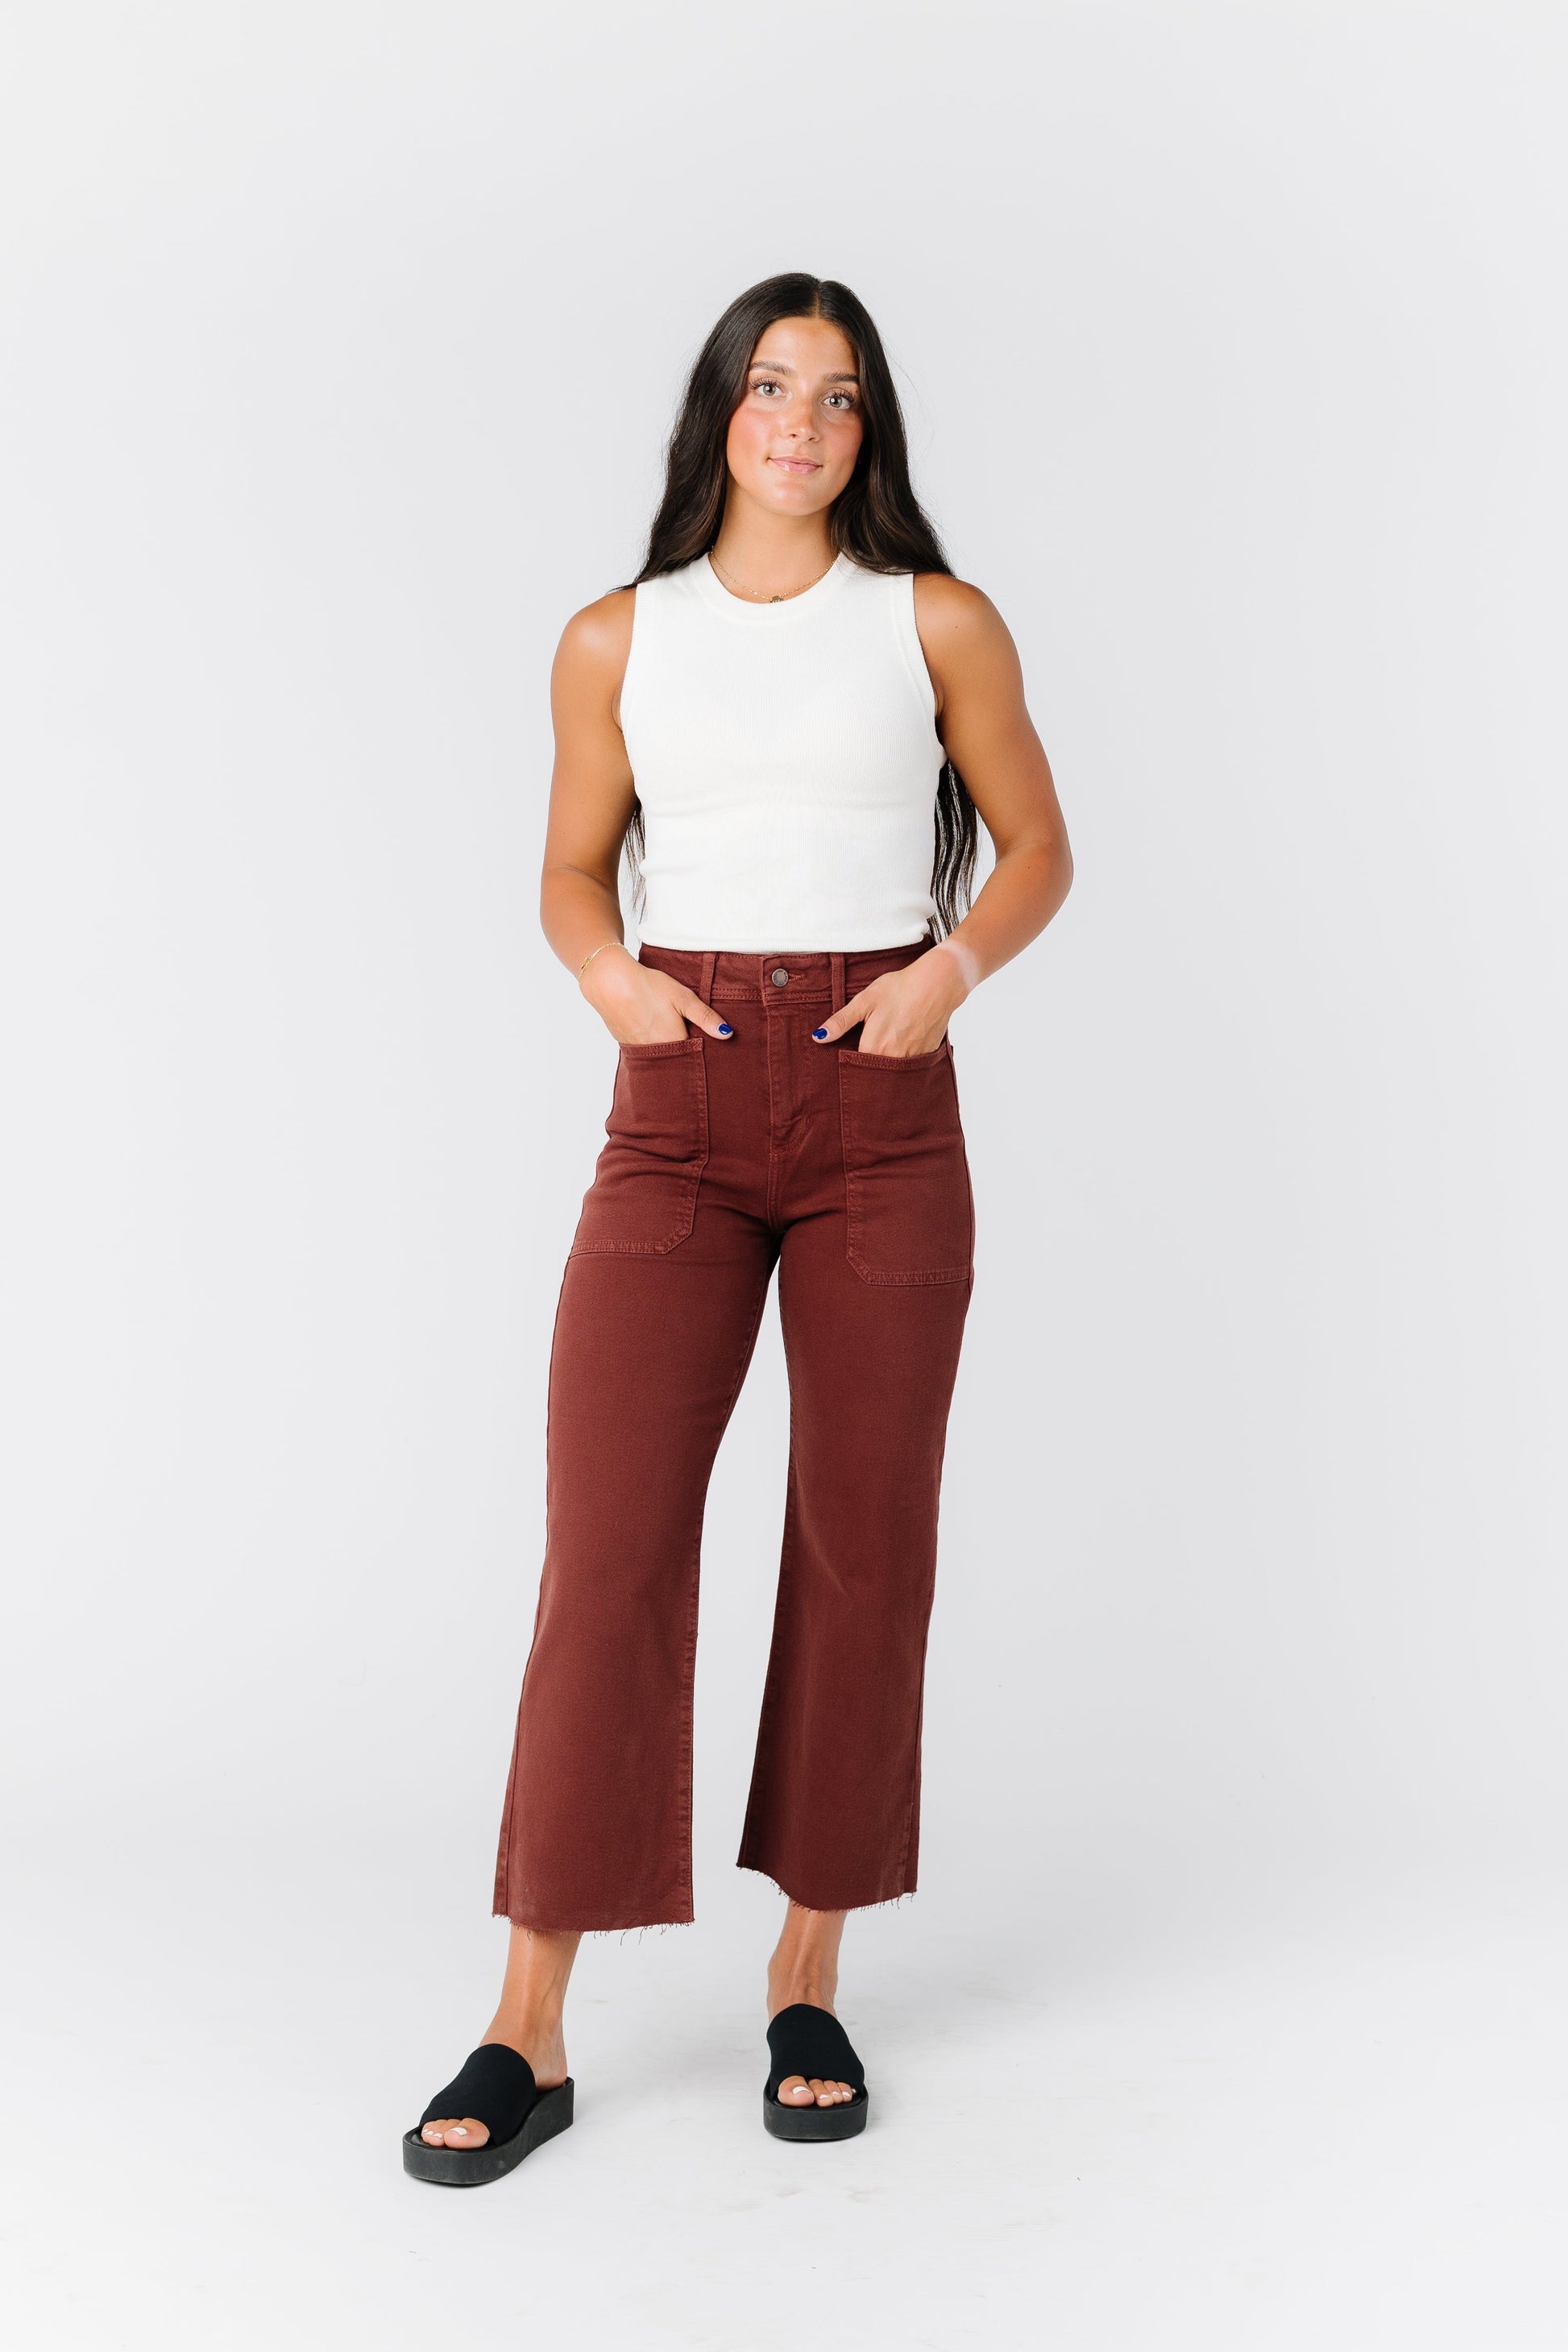 HR Utility Wide Leg Jeans - Cinnamon WOMEN'S JEANS Just Panmaco Inc. 